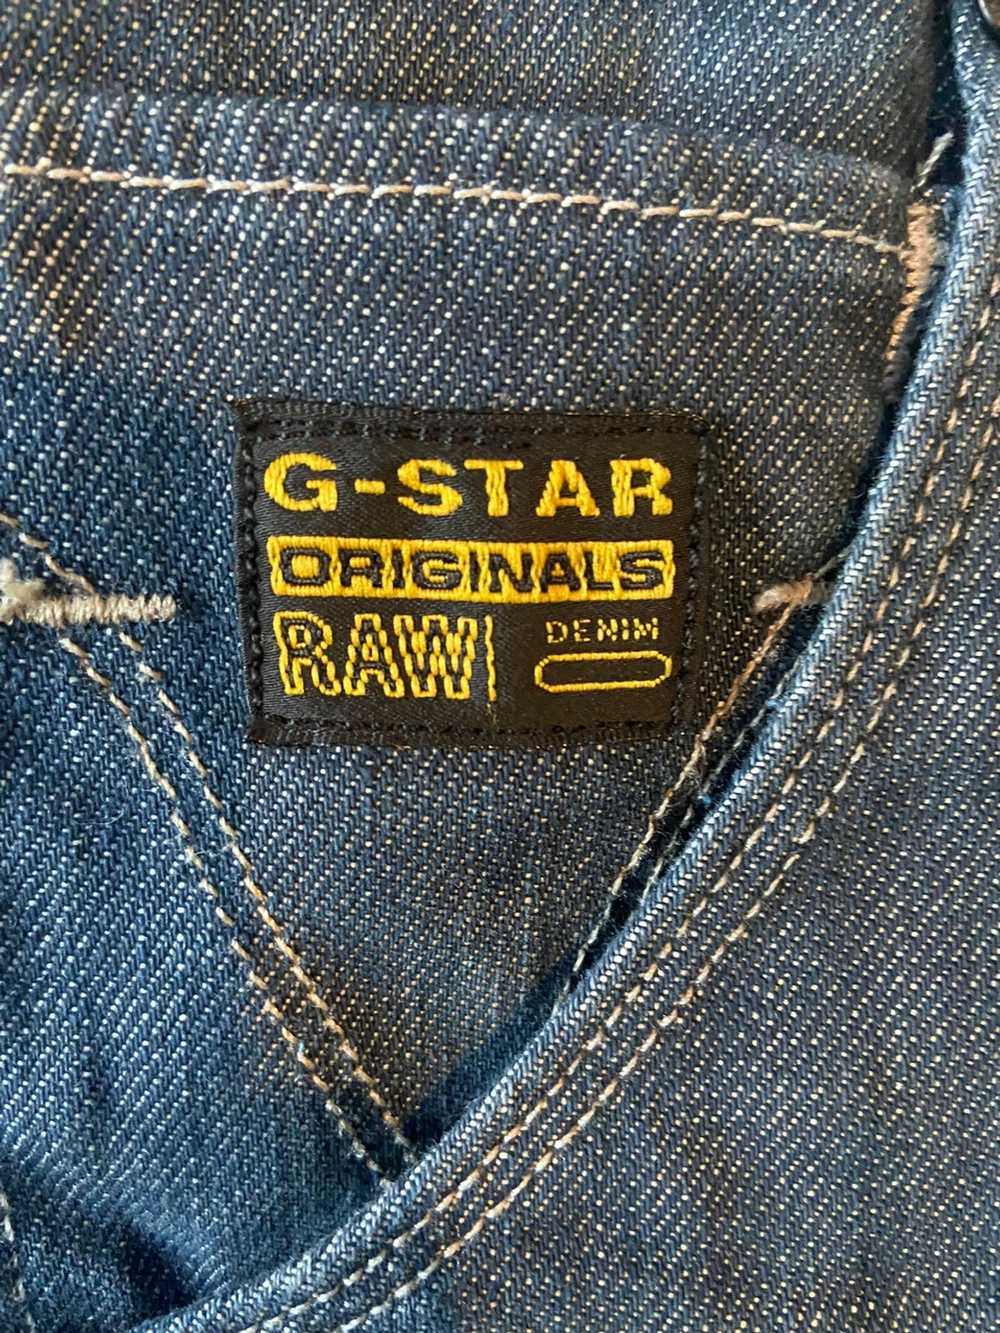 G Star Raw G star raw denim jeans - image 3